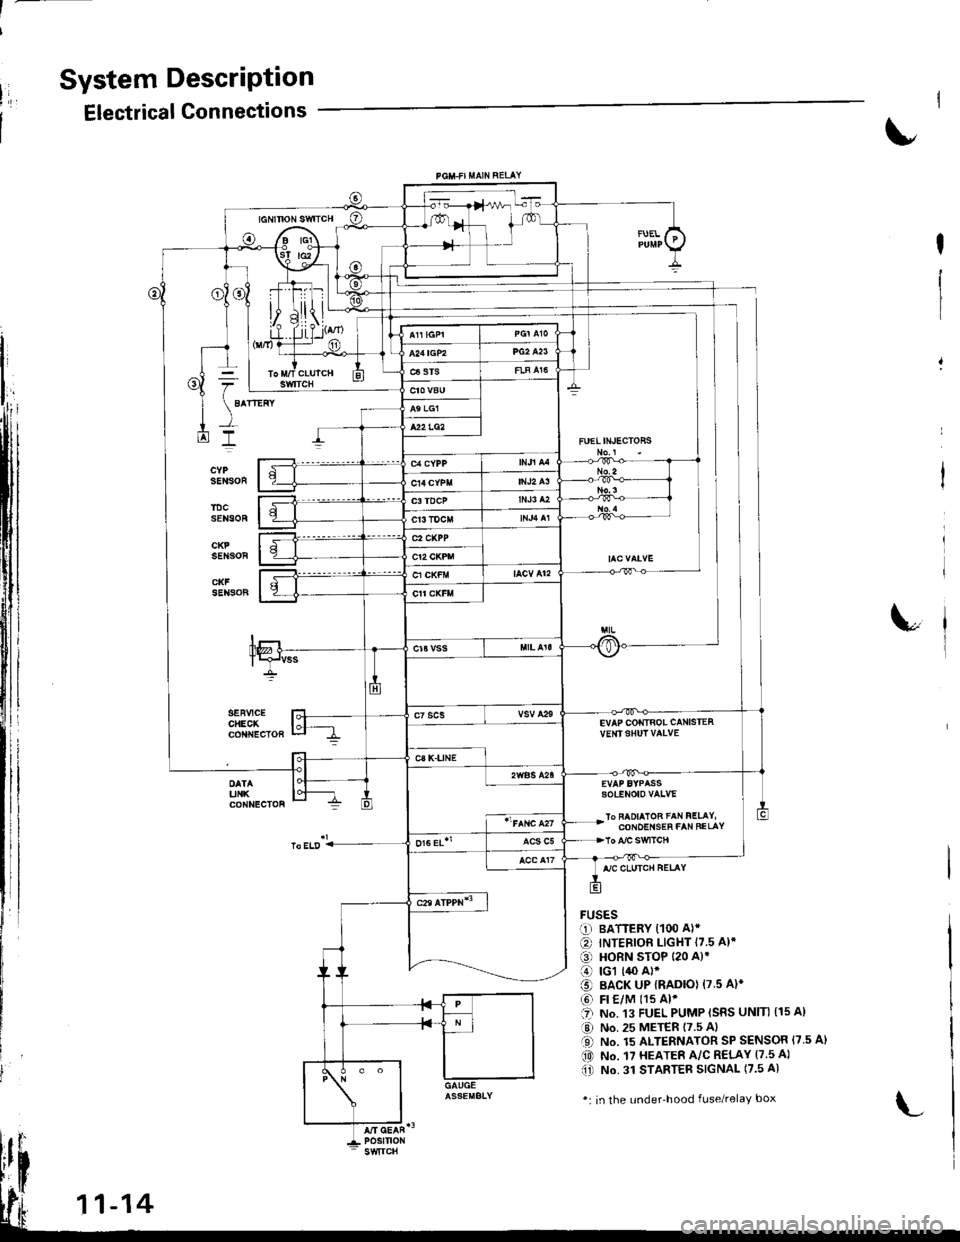 HONDA INTEGRA 1998 4.G Workshop Manual System DescriPtion
Electrical Connections
FUELINECTOHS
EVAP COIiTIBOL CANISTEAvE|rISHUT VAIVE
sotENoto vaLvE
lo FAOIAIOB FAN FELAY,CONOEI{SEh FAN FELAY
FUSESr-1) BATTERY {100 A)*
€) INTERIOF LIGHT 